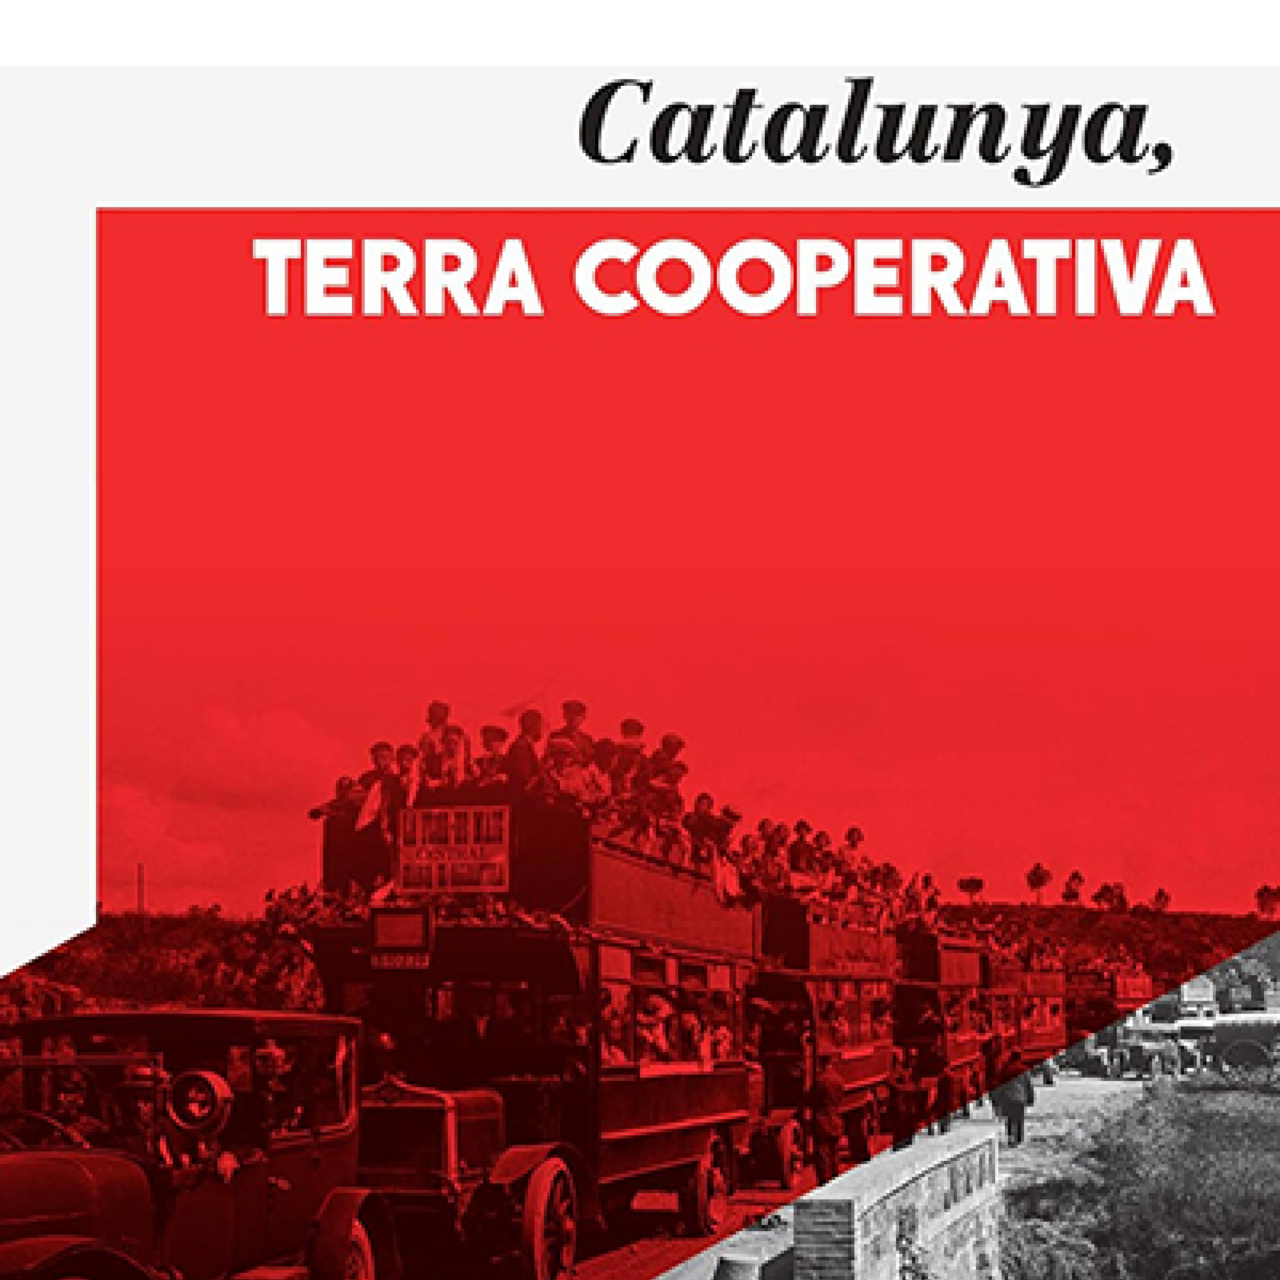 Catalunya, terra cooperativa